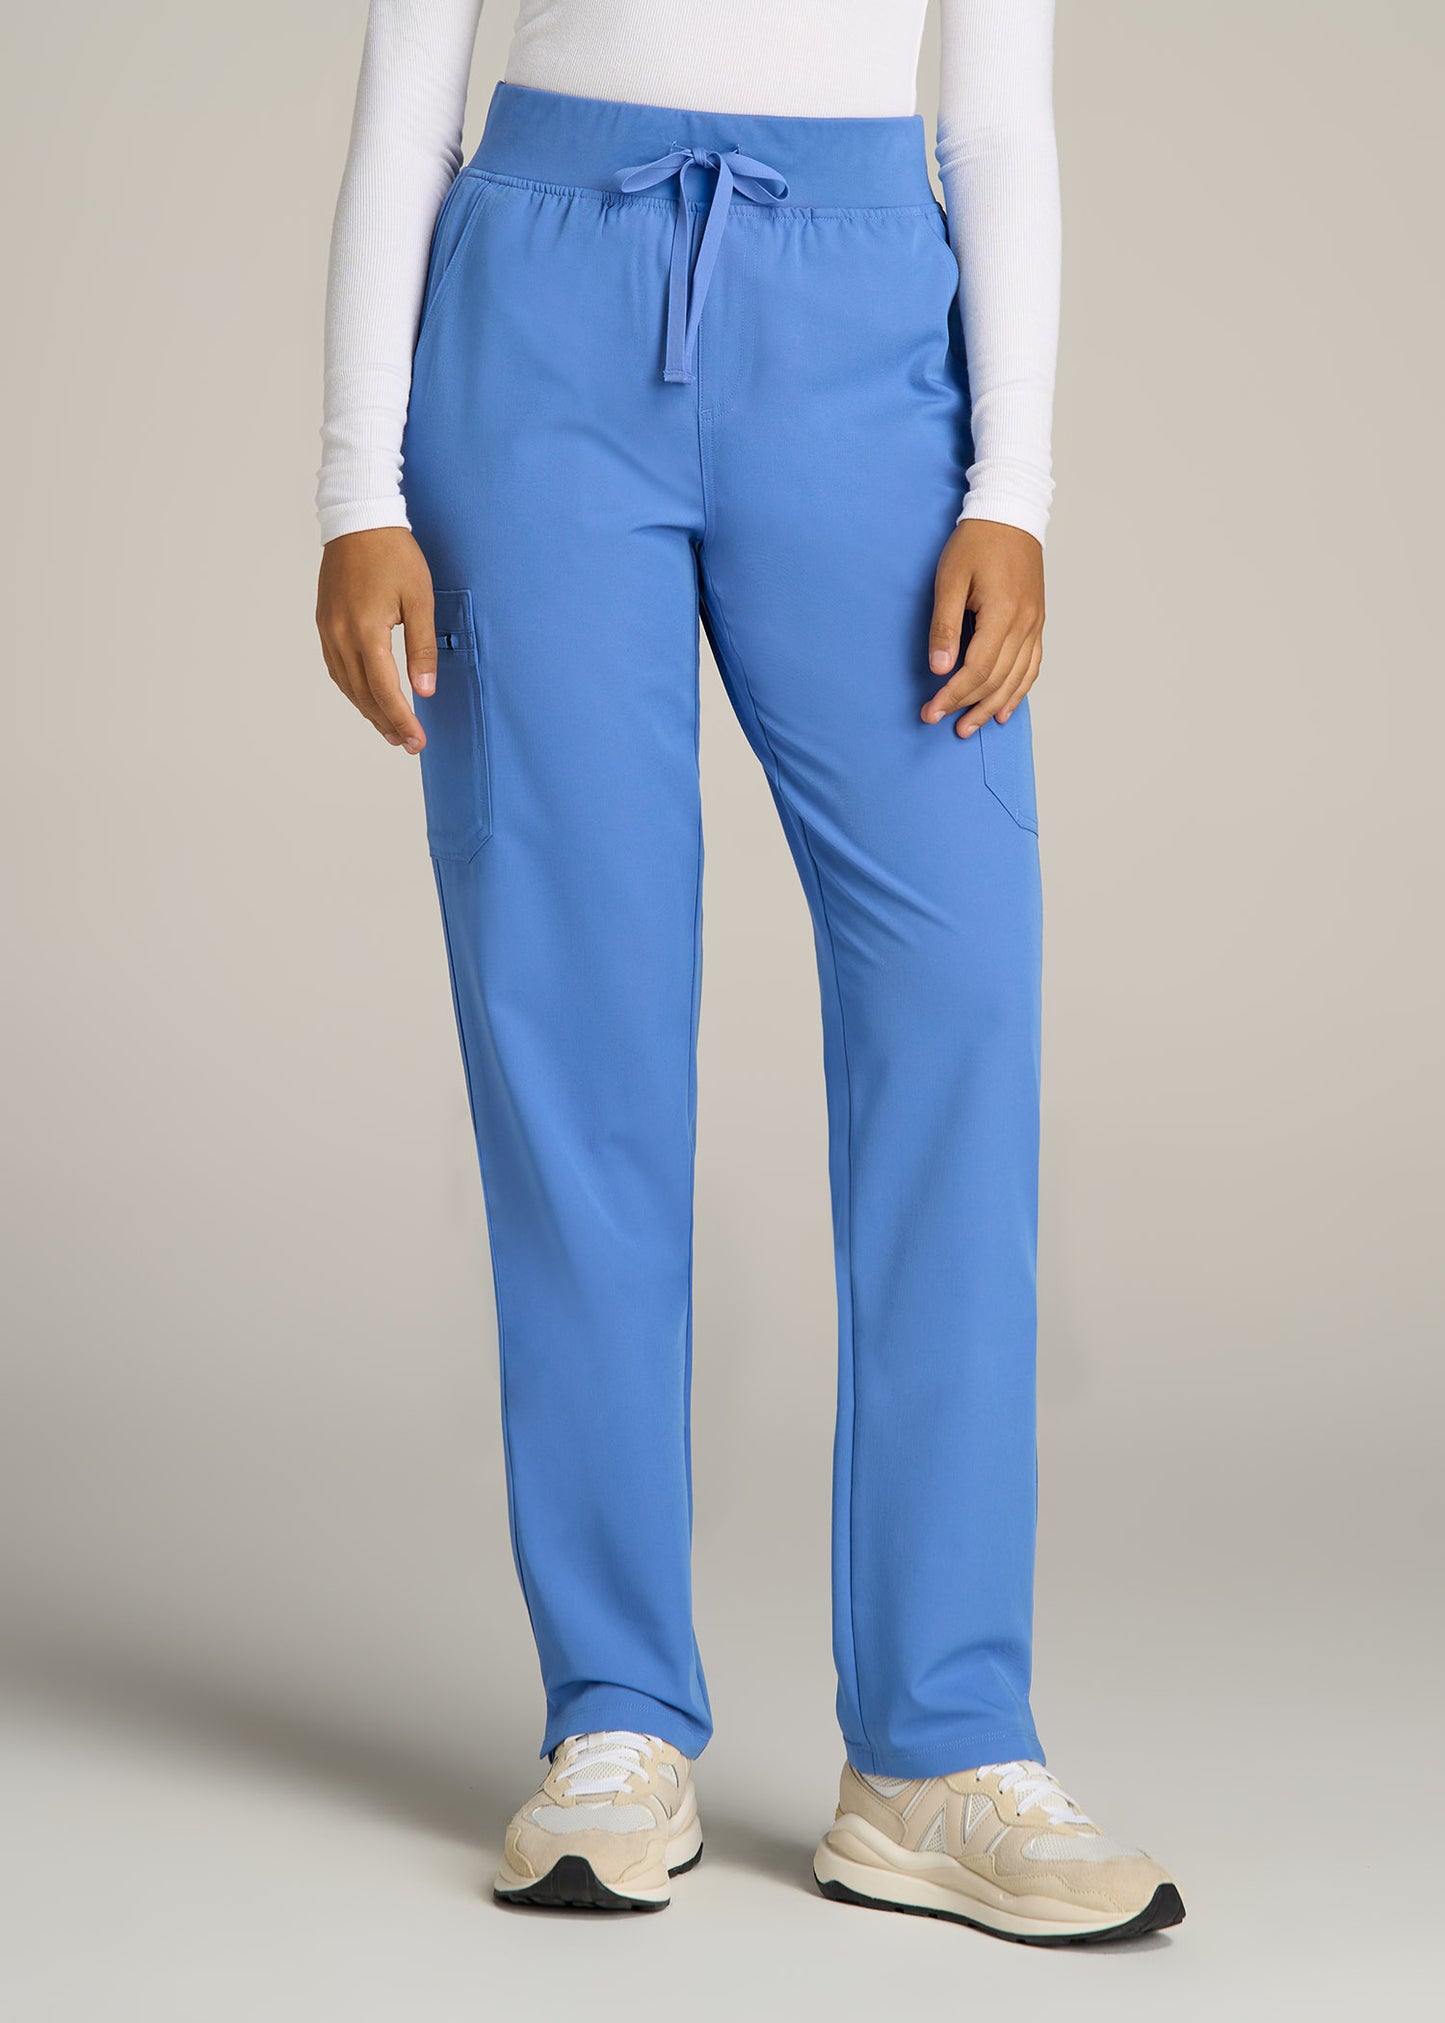 Women's Straight-Leg Cargo Scrub Pants (Tall Length) – BodyMoves Scrubs  Boutique